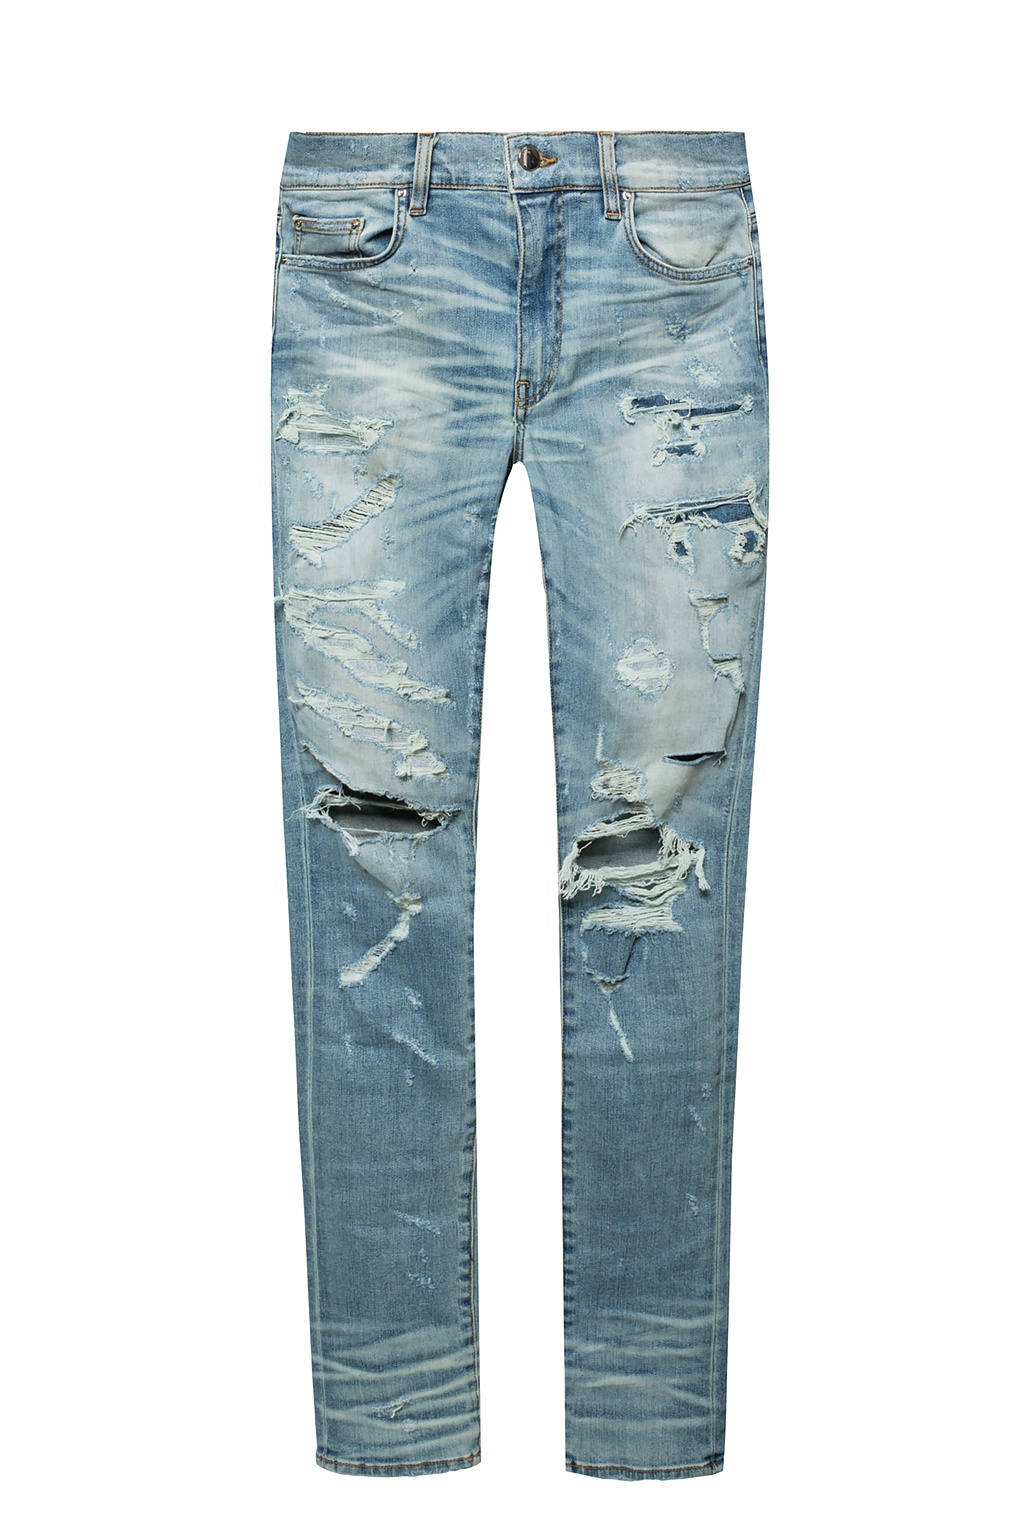 amiri jeans canada